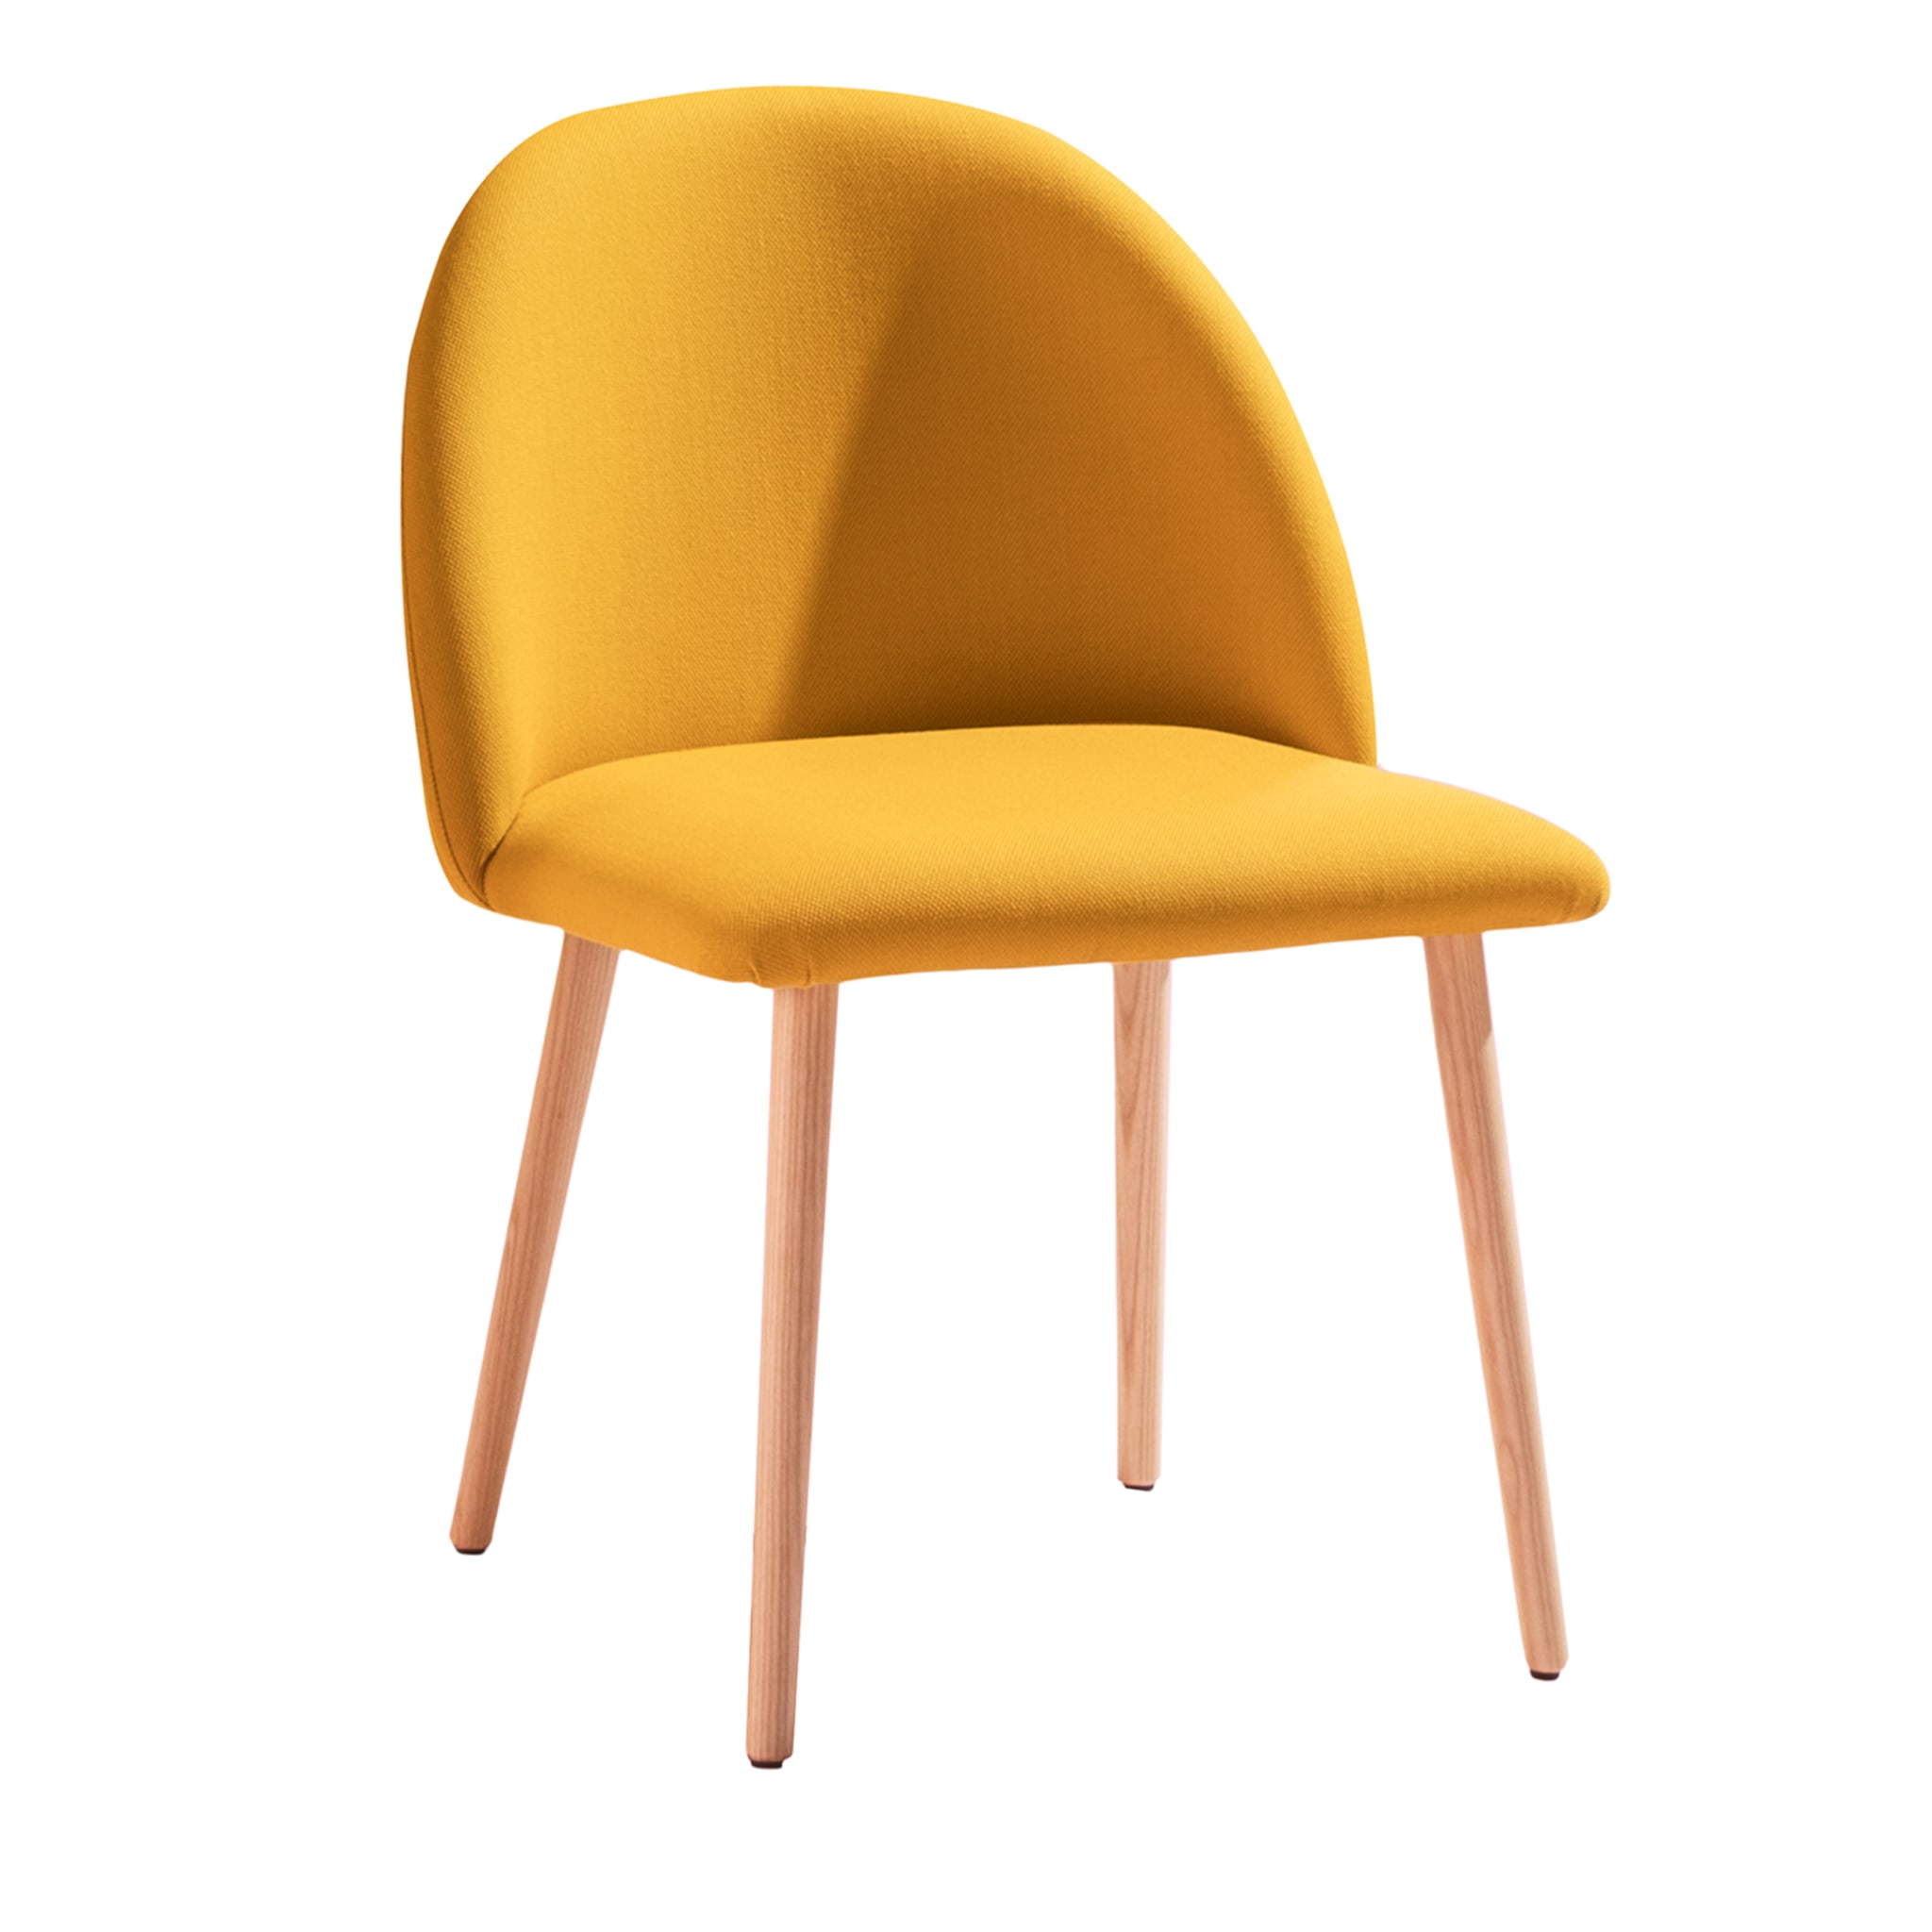 Bloom Yellow Chair #1 - Main view